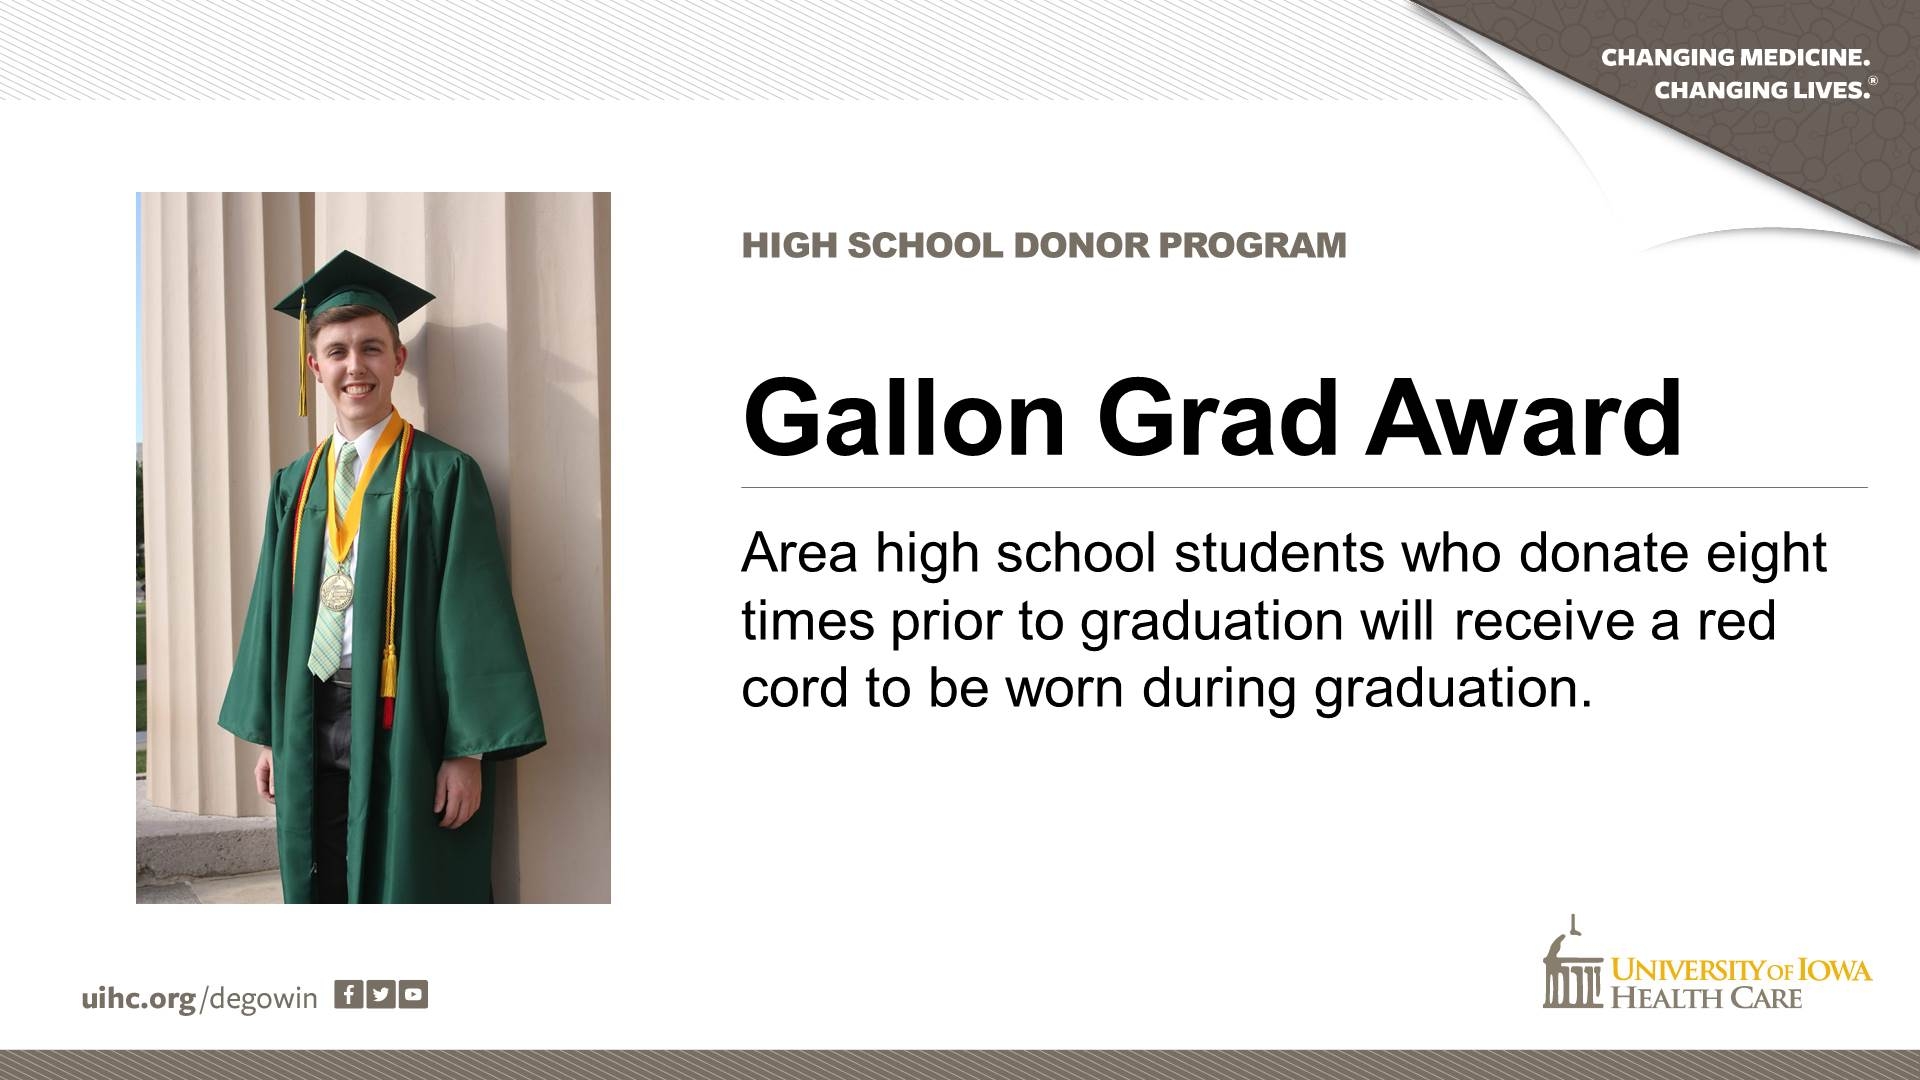 Gallon Grad Award for area high school students